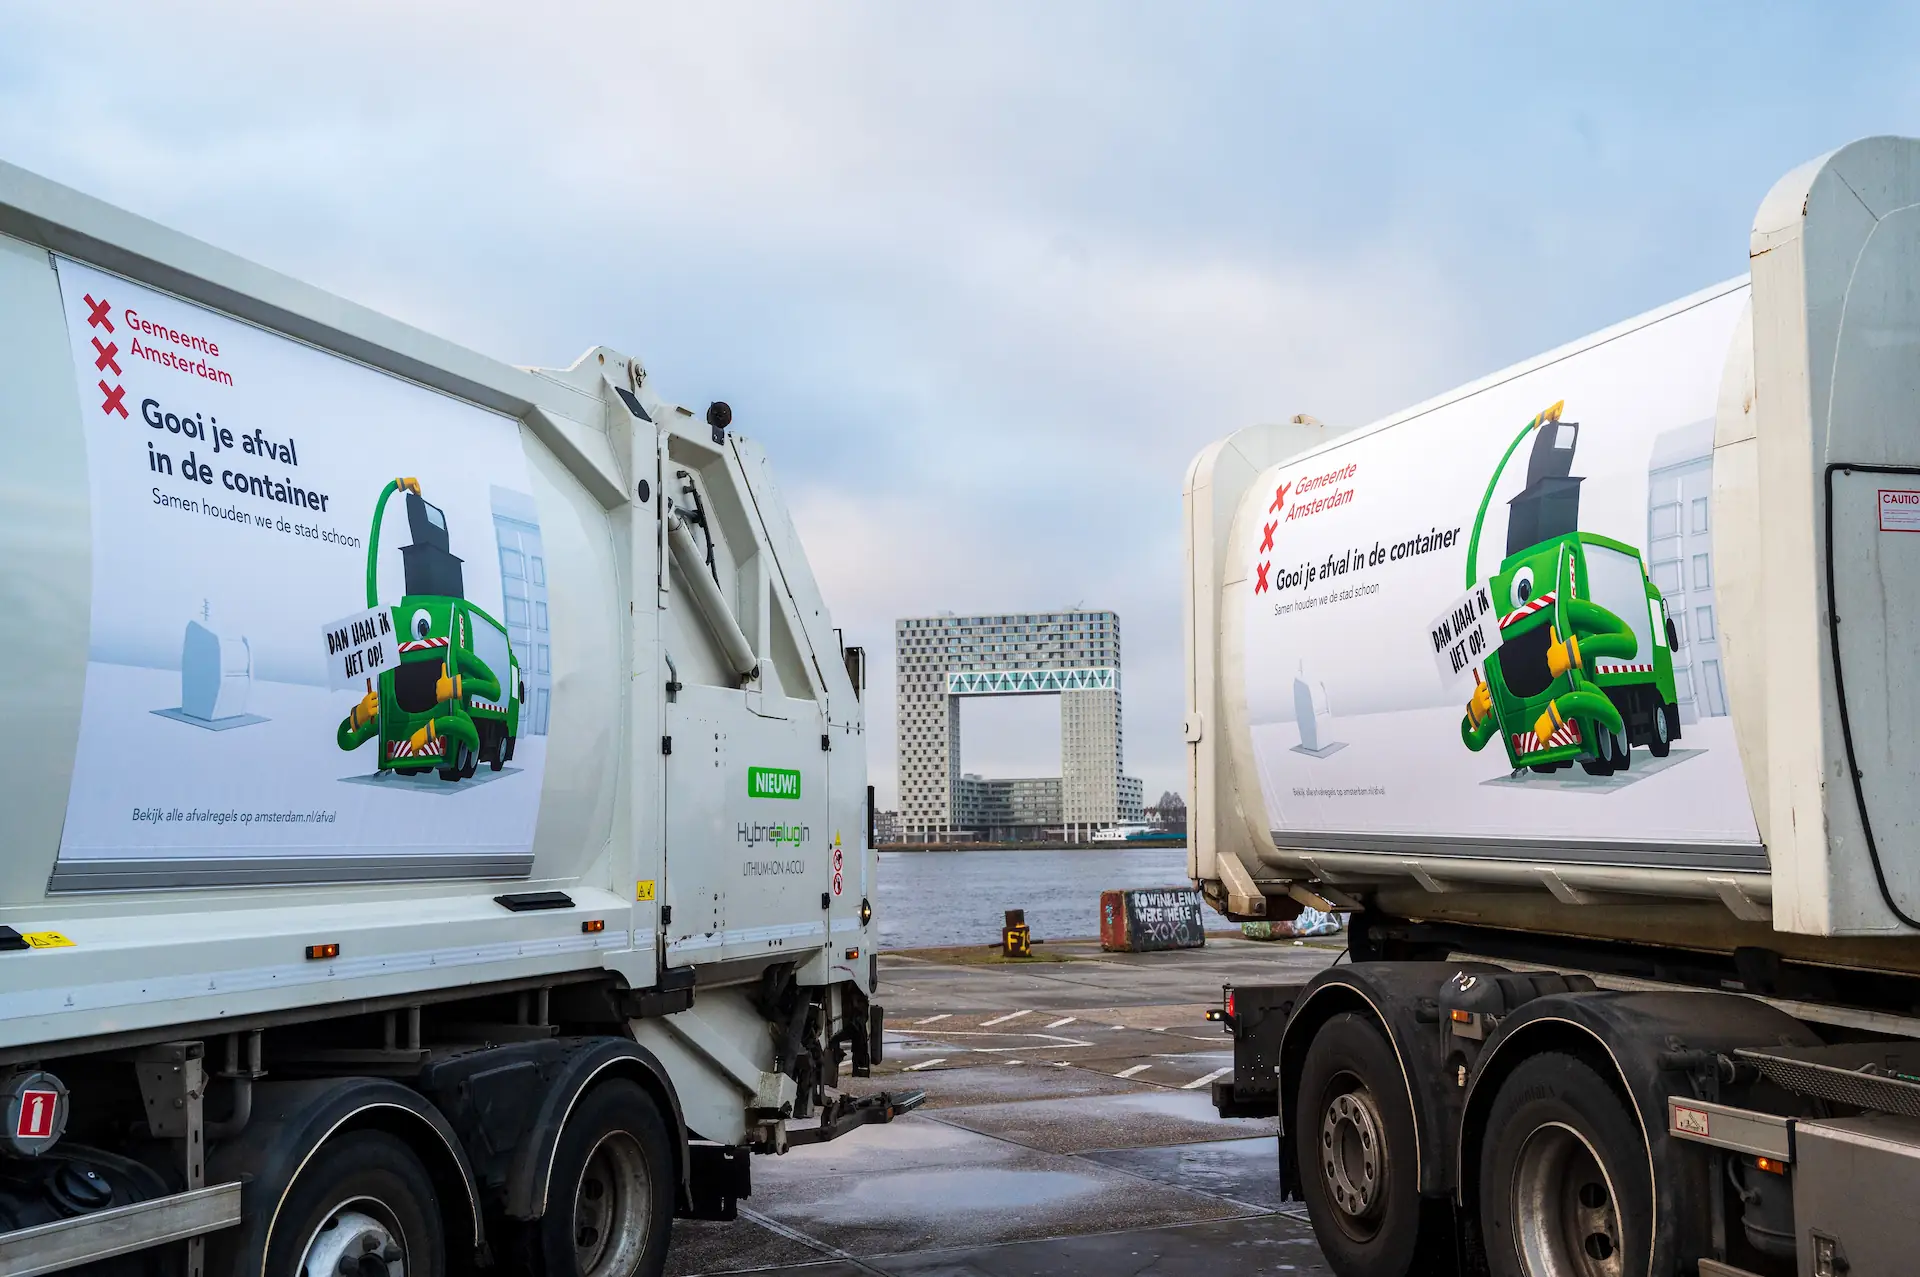 Sams reclamewisselsysteem toegepast op vuilniswagens in Amsterdam